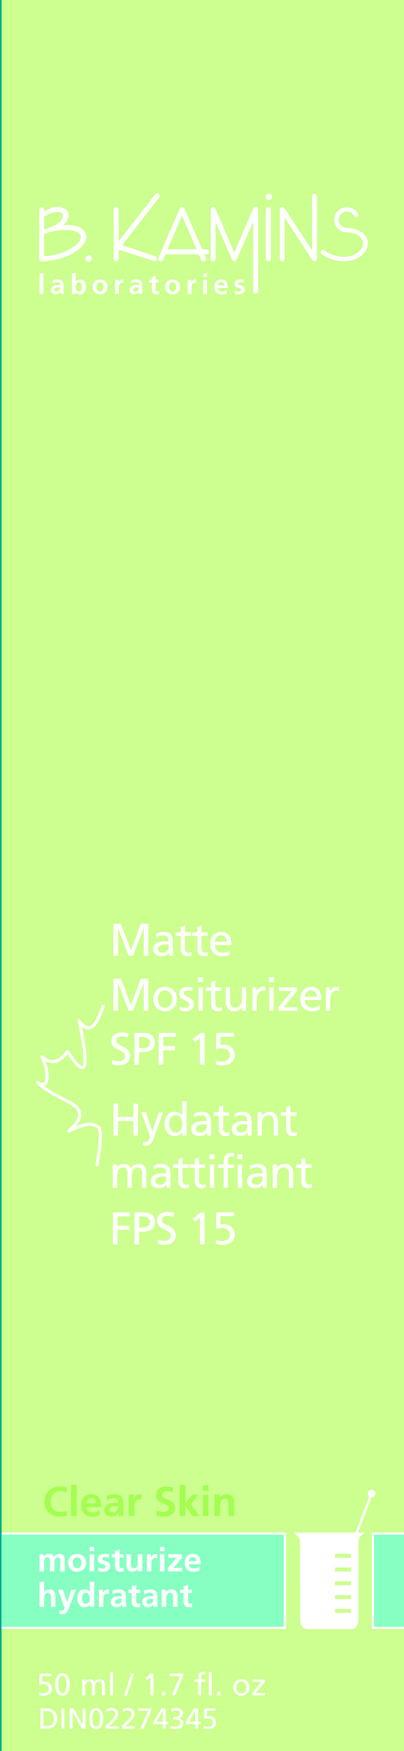 Matte Moisturizer SPF front panel image